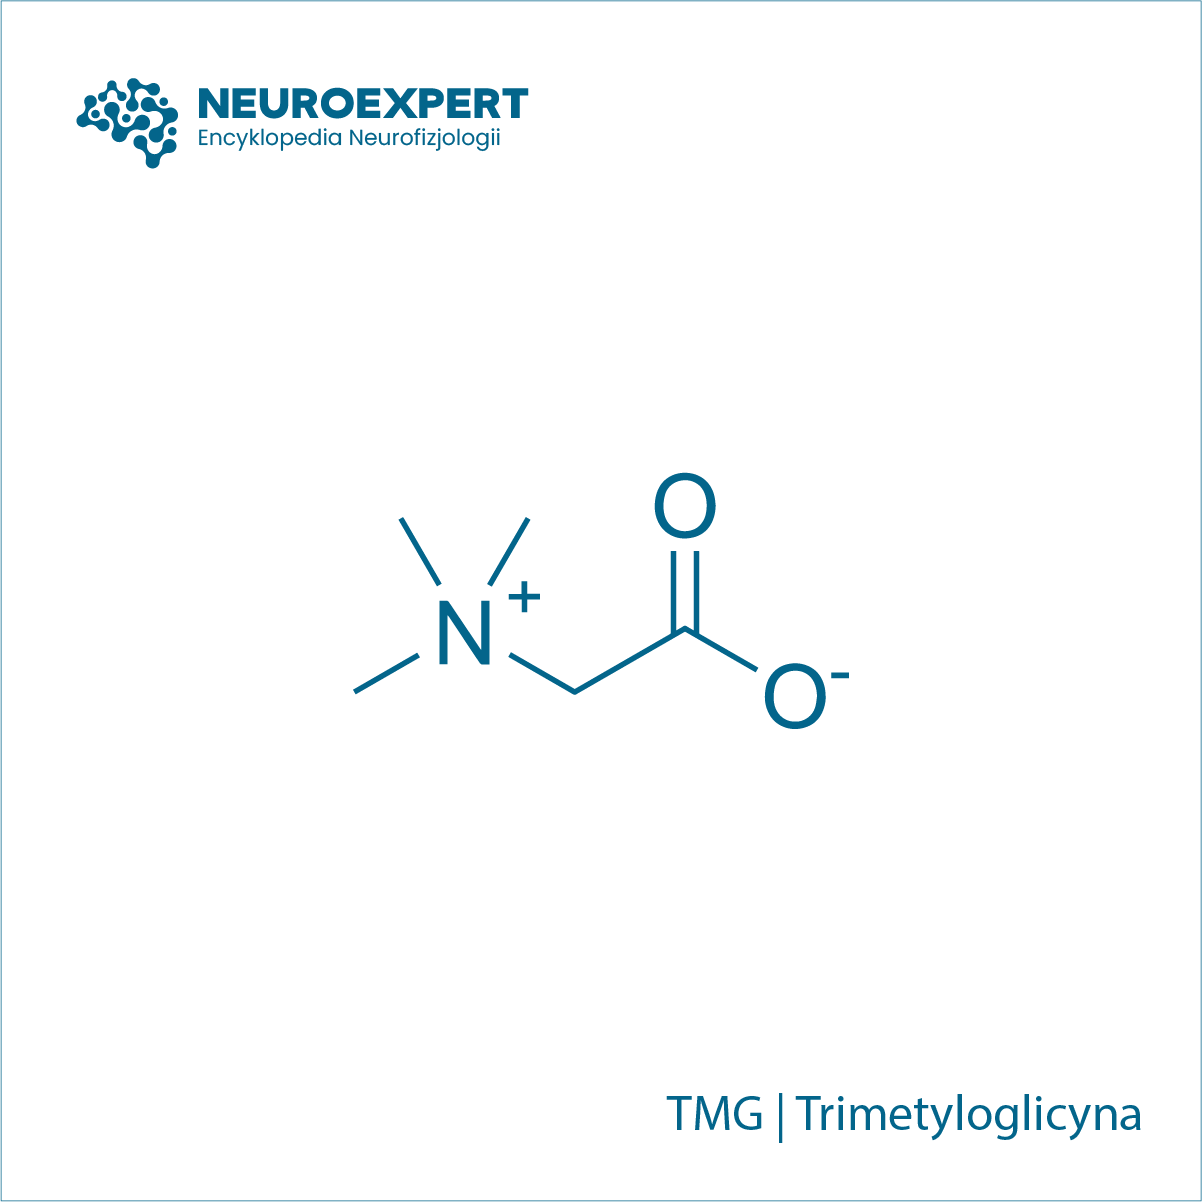 TMG Trimetyloglicyna